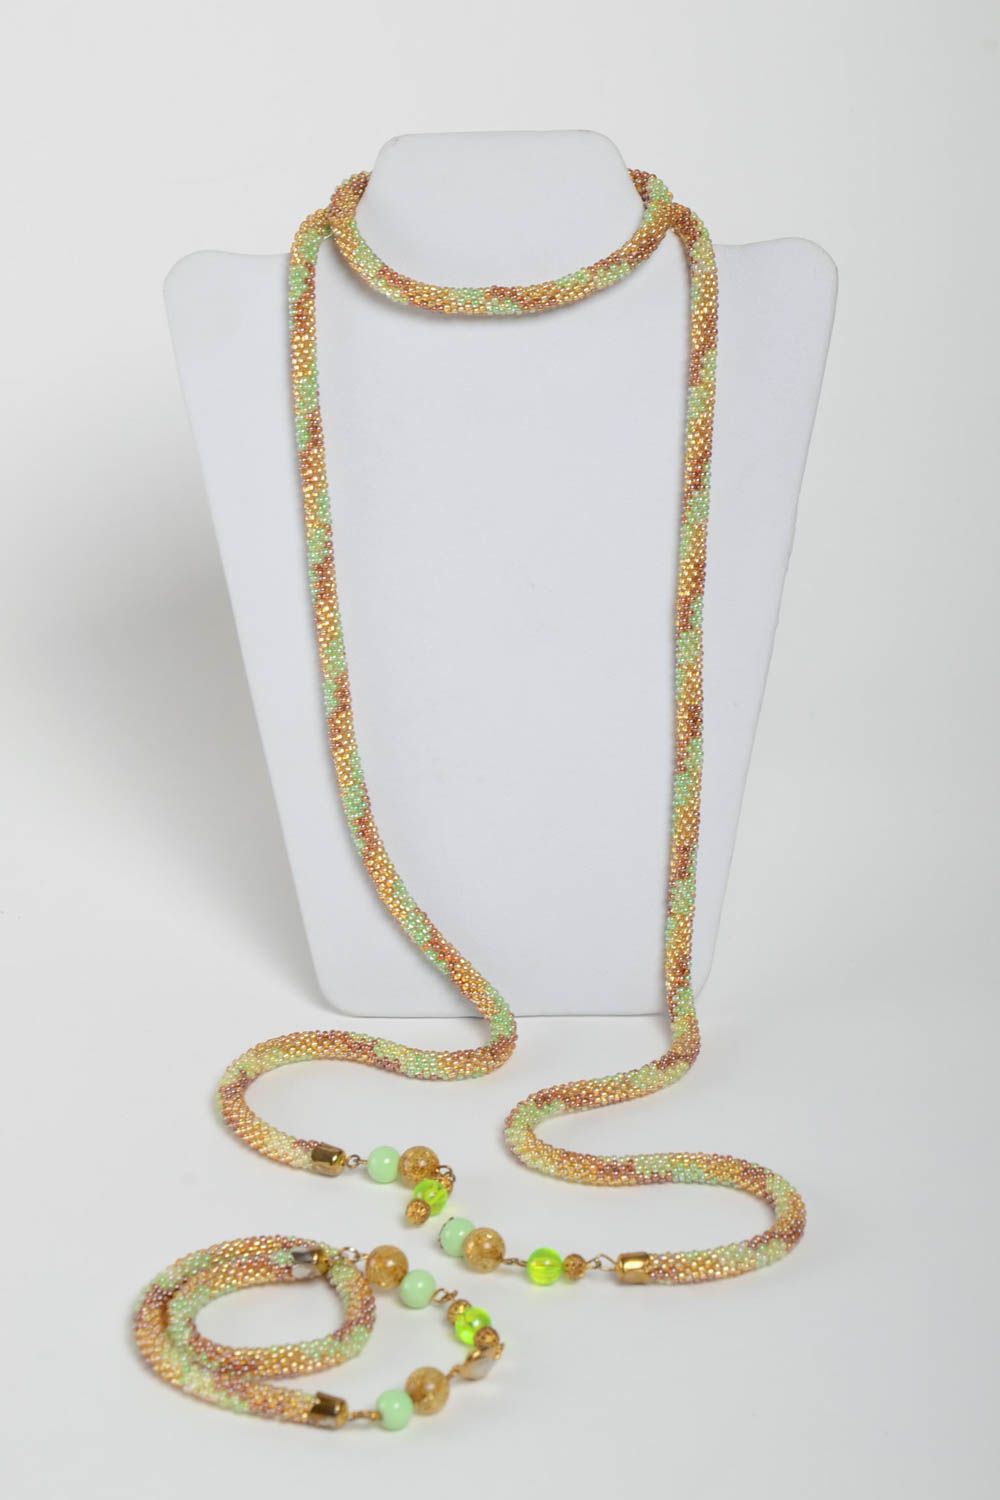 Gentle handmade beaded cord necklace and bracelet designer jewelry for women photo 3